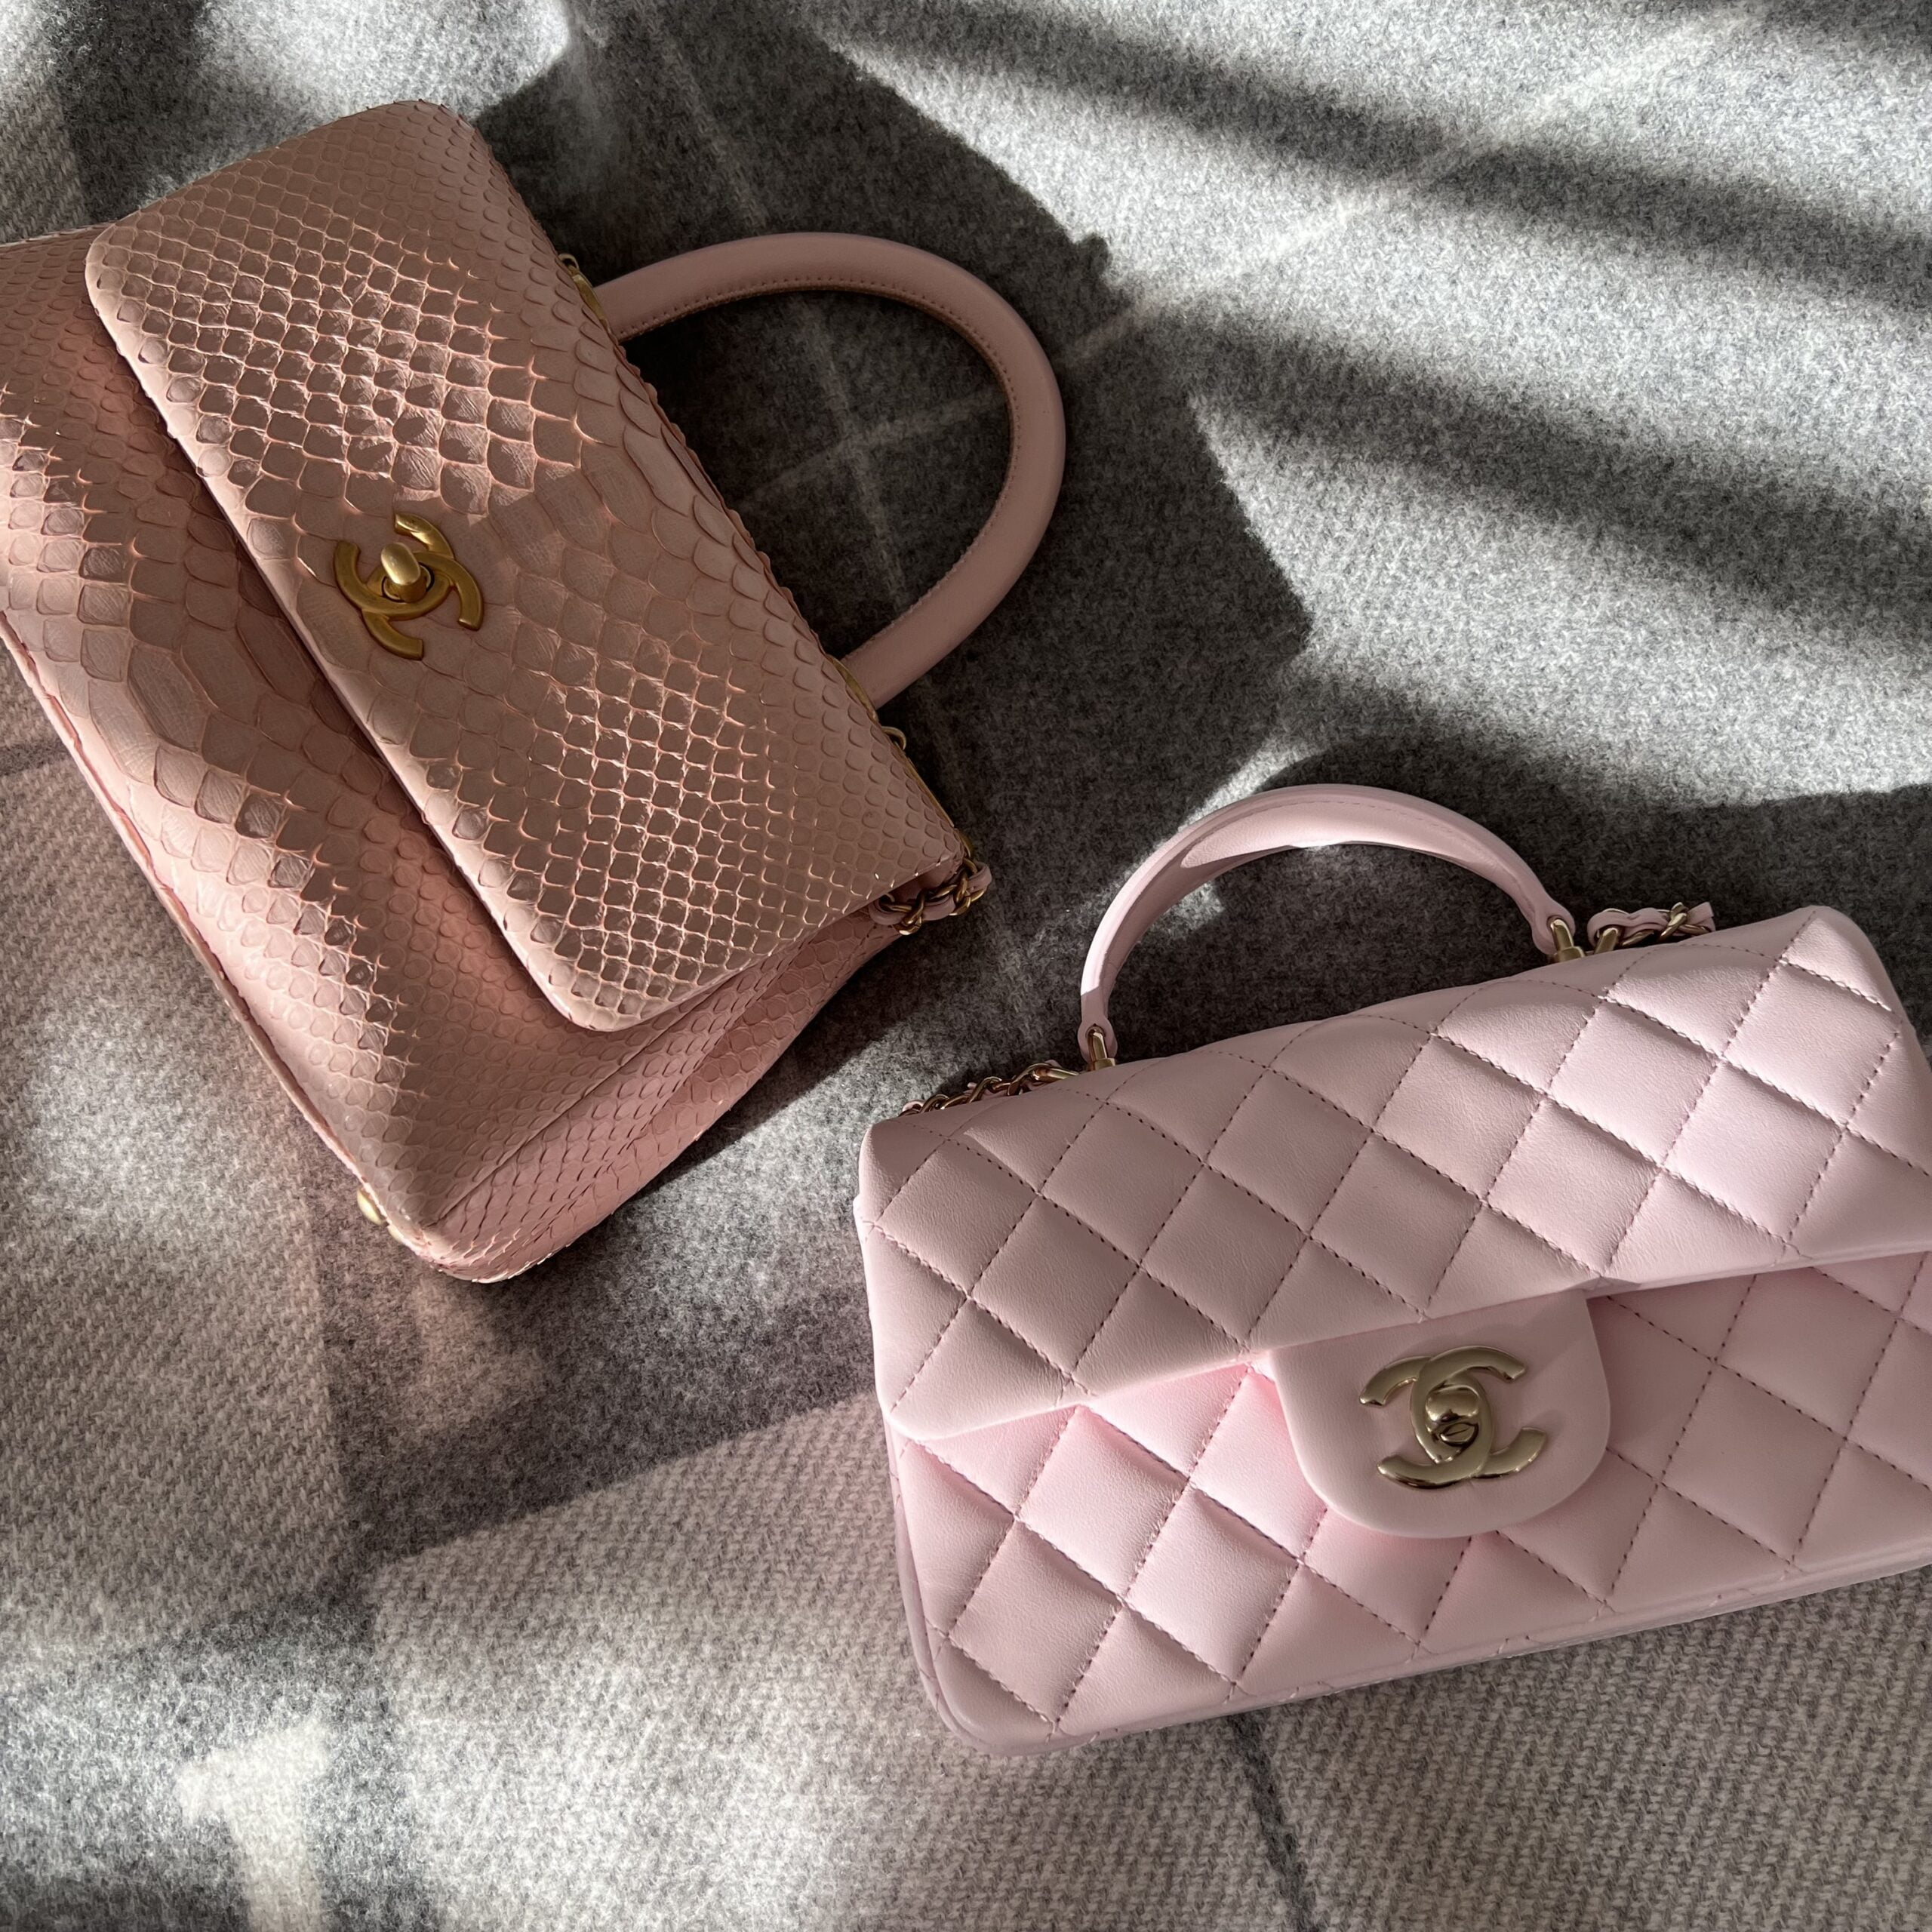 chanel backpack purse sets